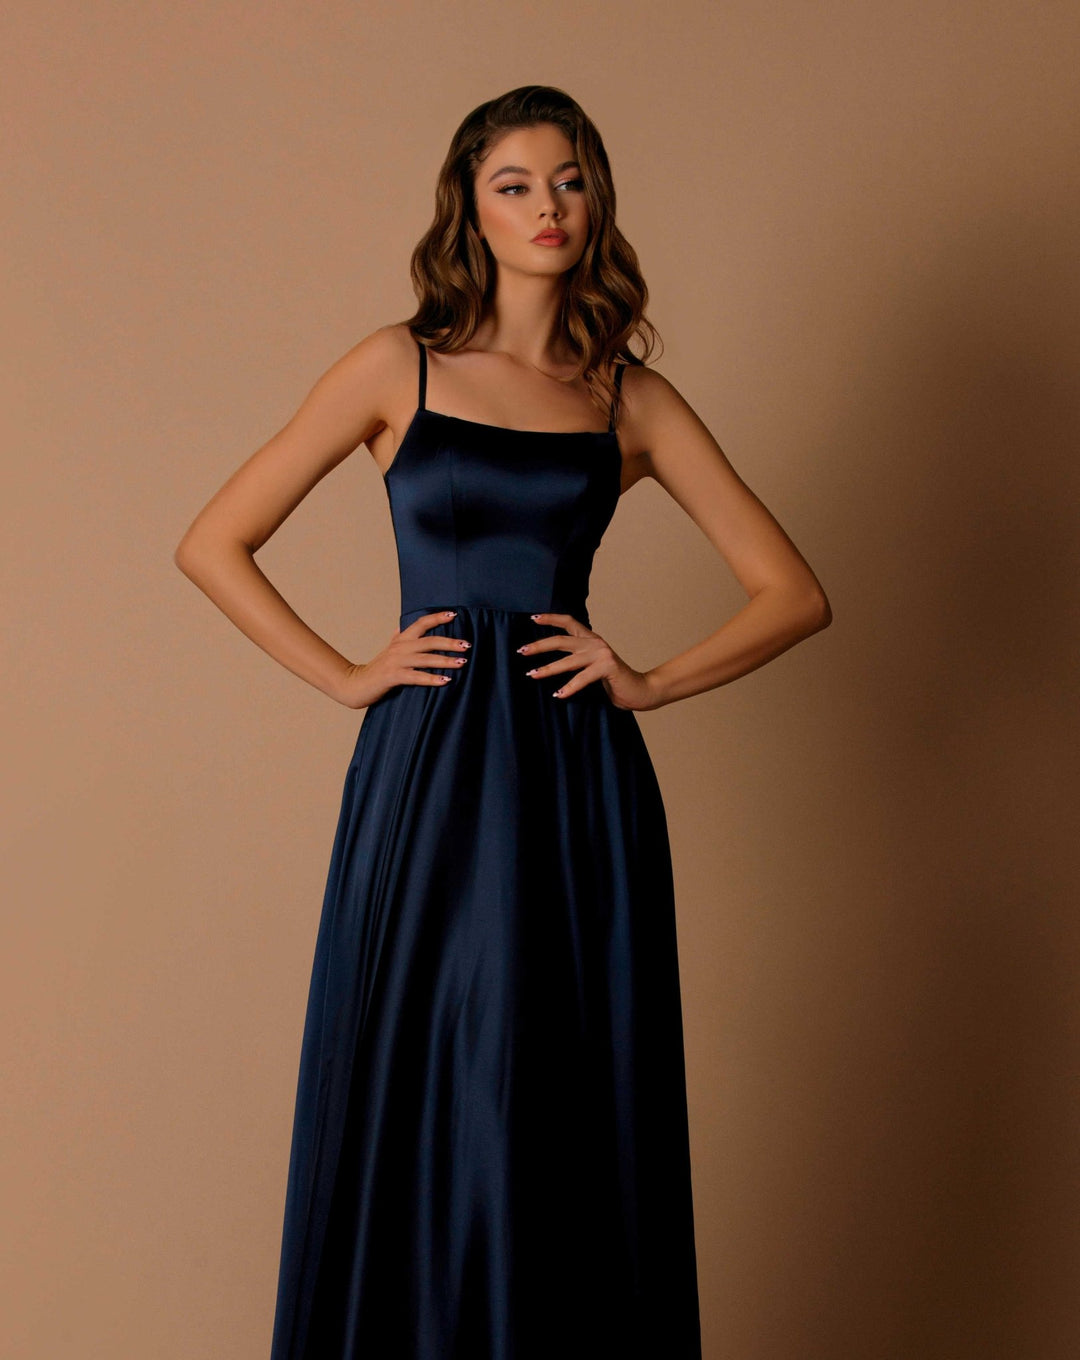 Kelly Dress by Nicoletta NBM1026 - ElissaJay Boutique